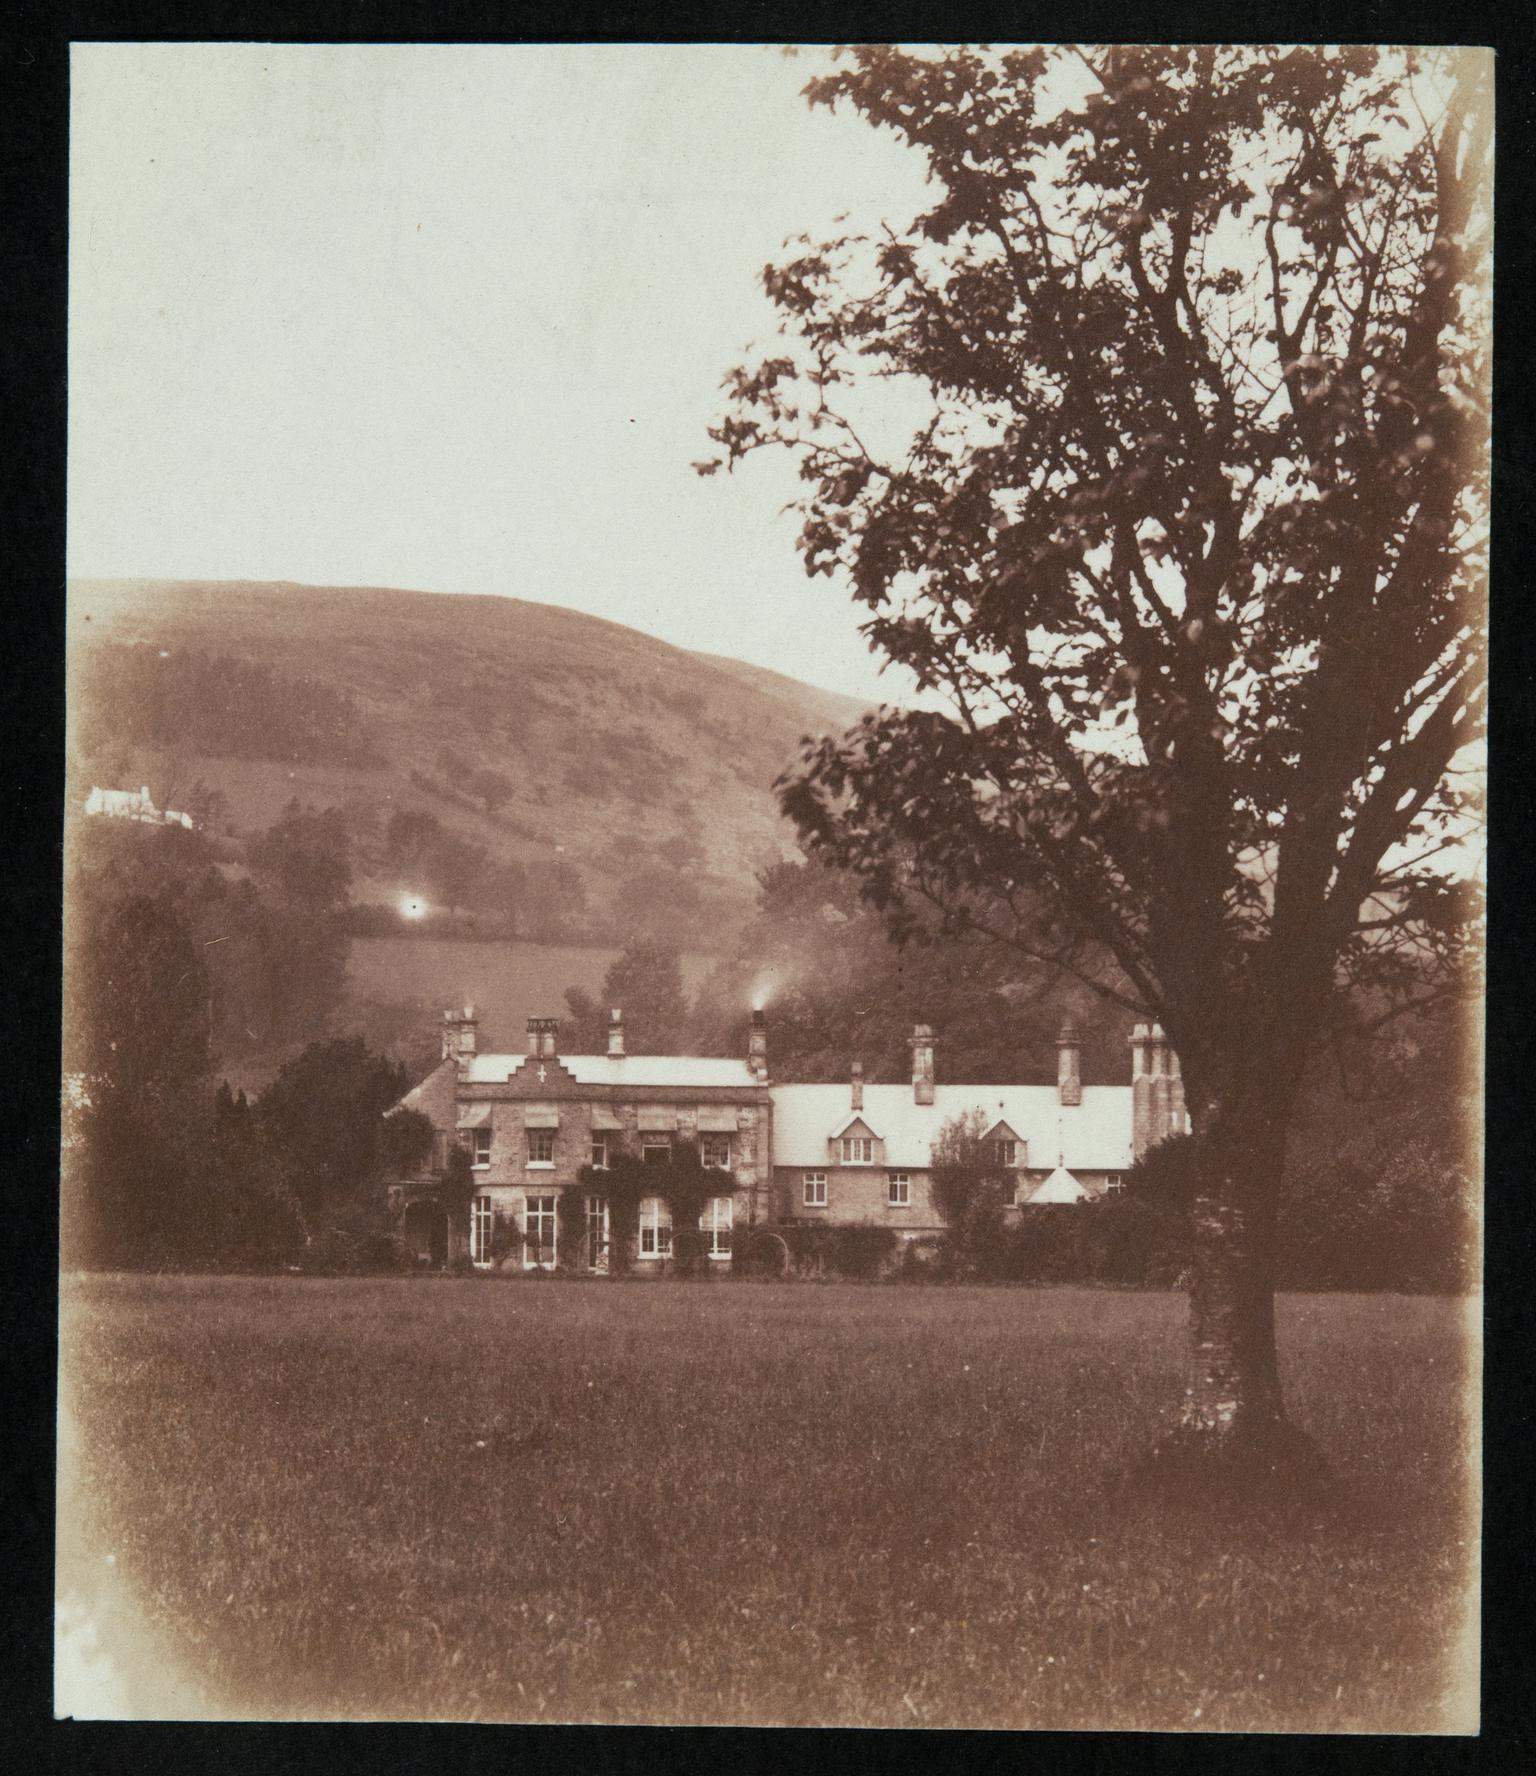 Lanelay, near Llantrisant, photograph